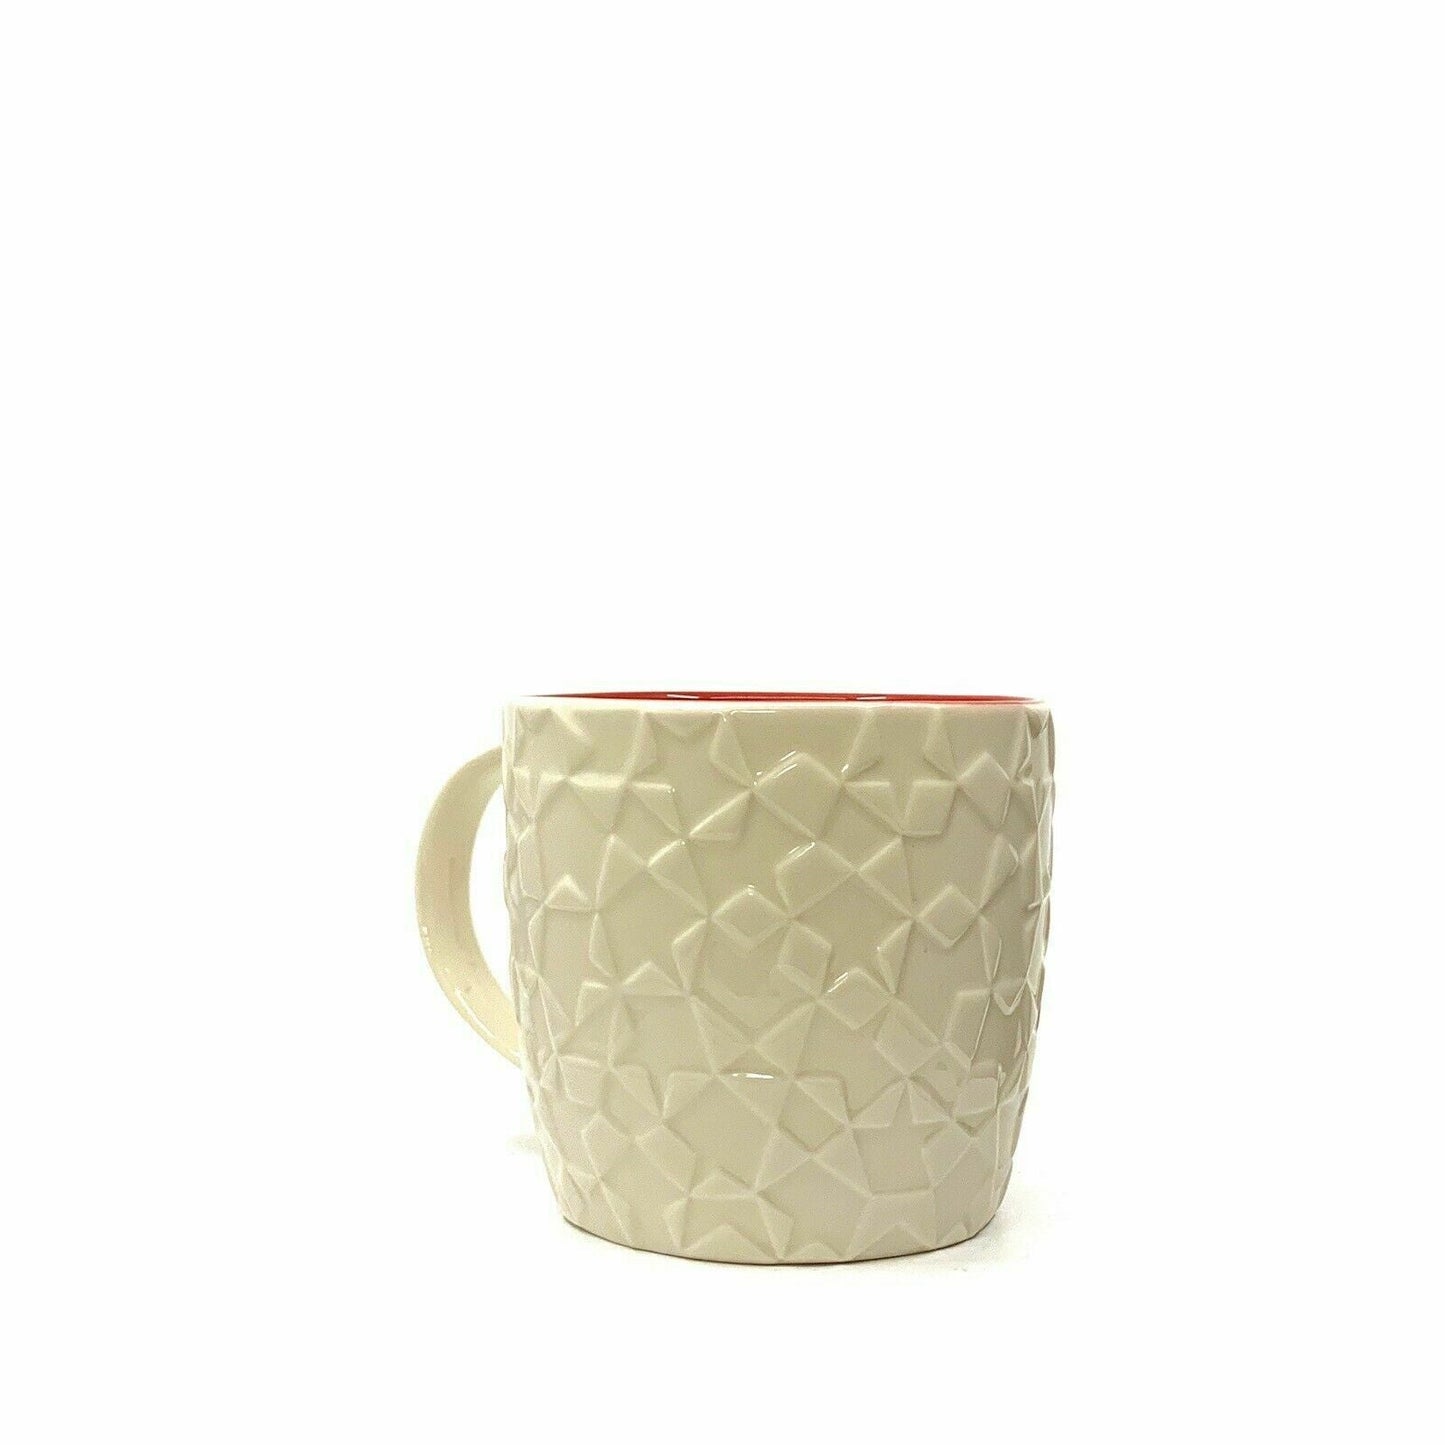 Charming Starbucks White Star Mosaic Embossed Ceramic 14oz Mug